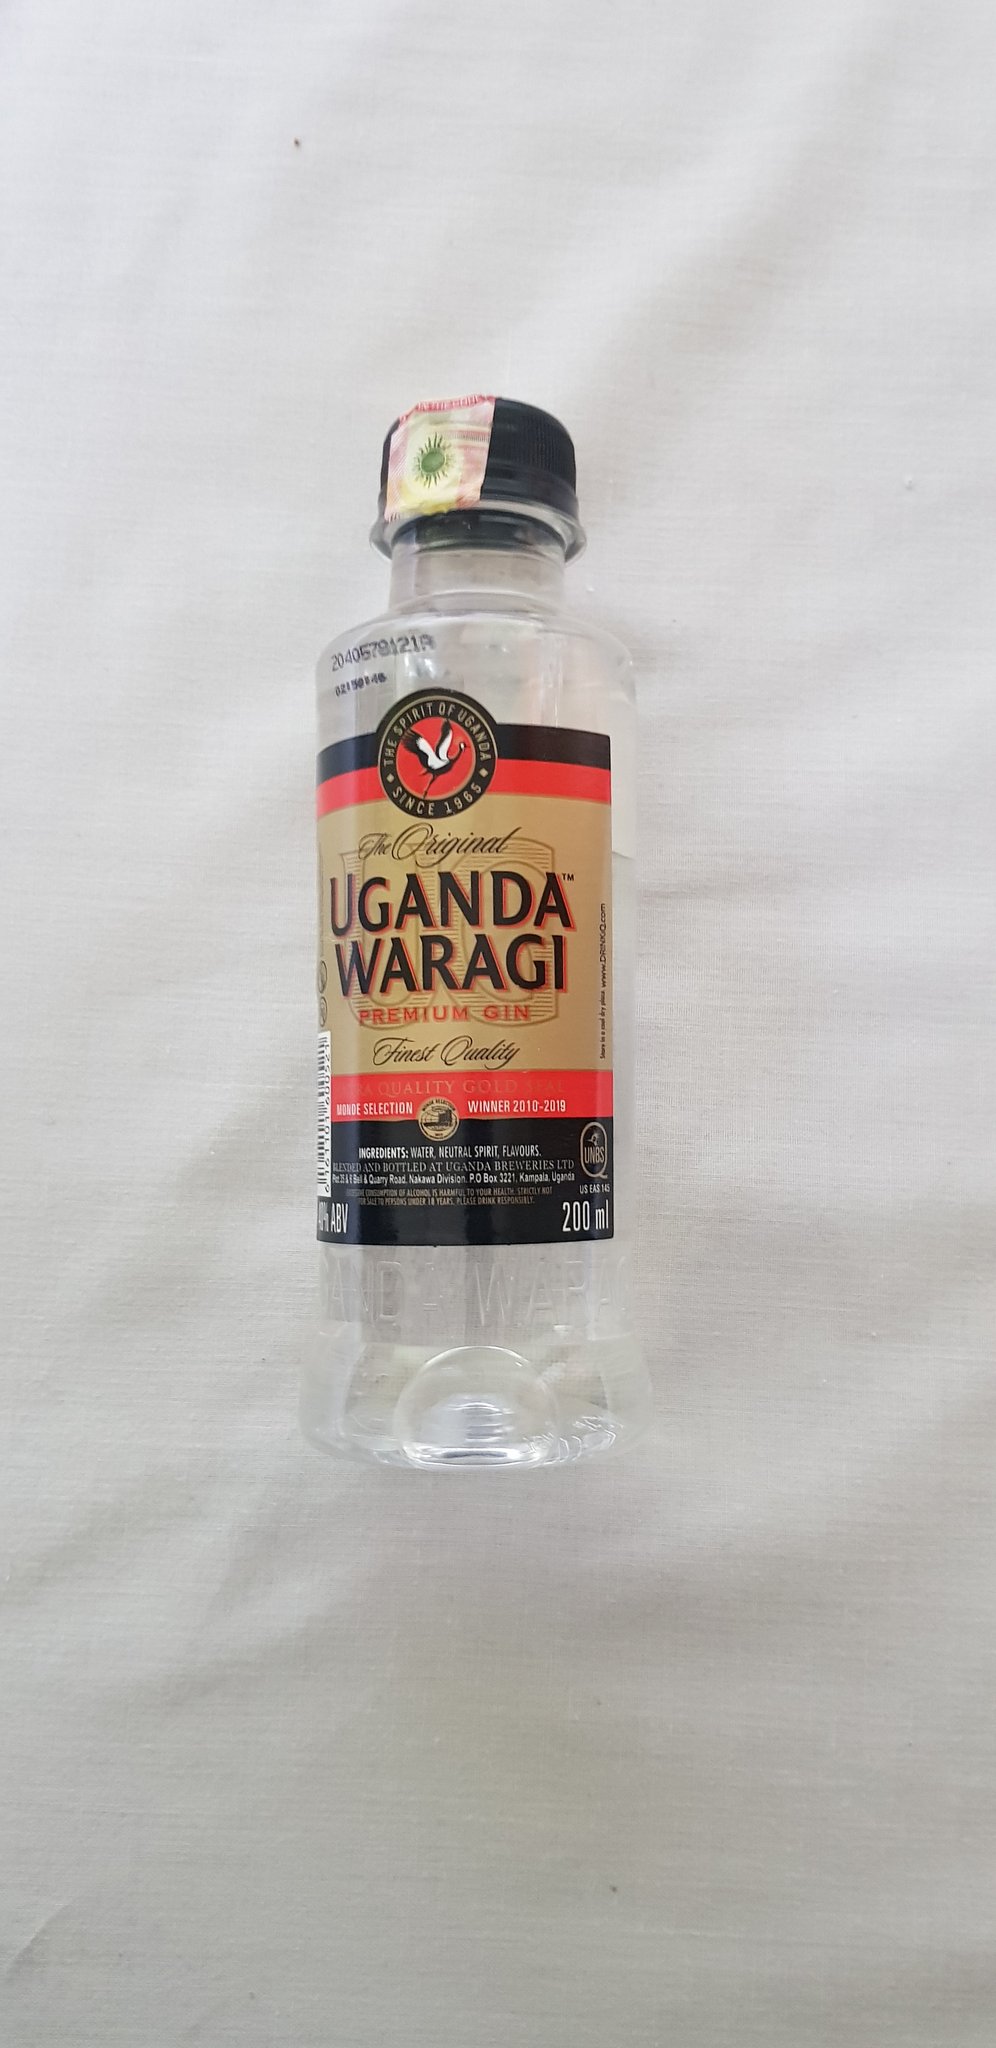 National drink of Uganda